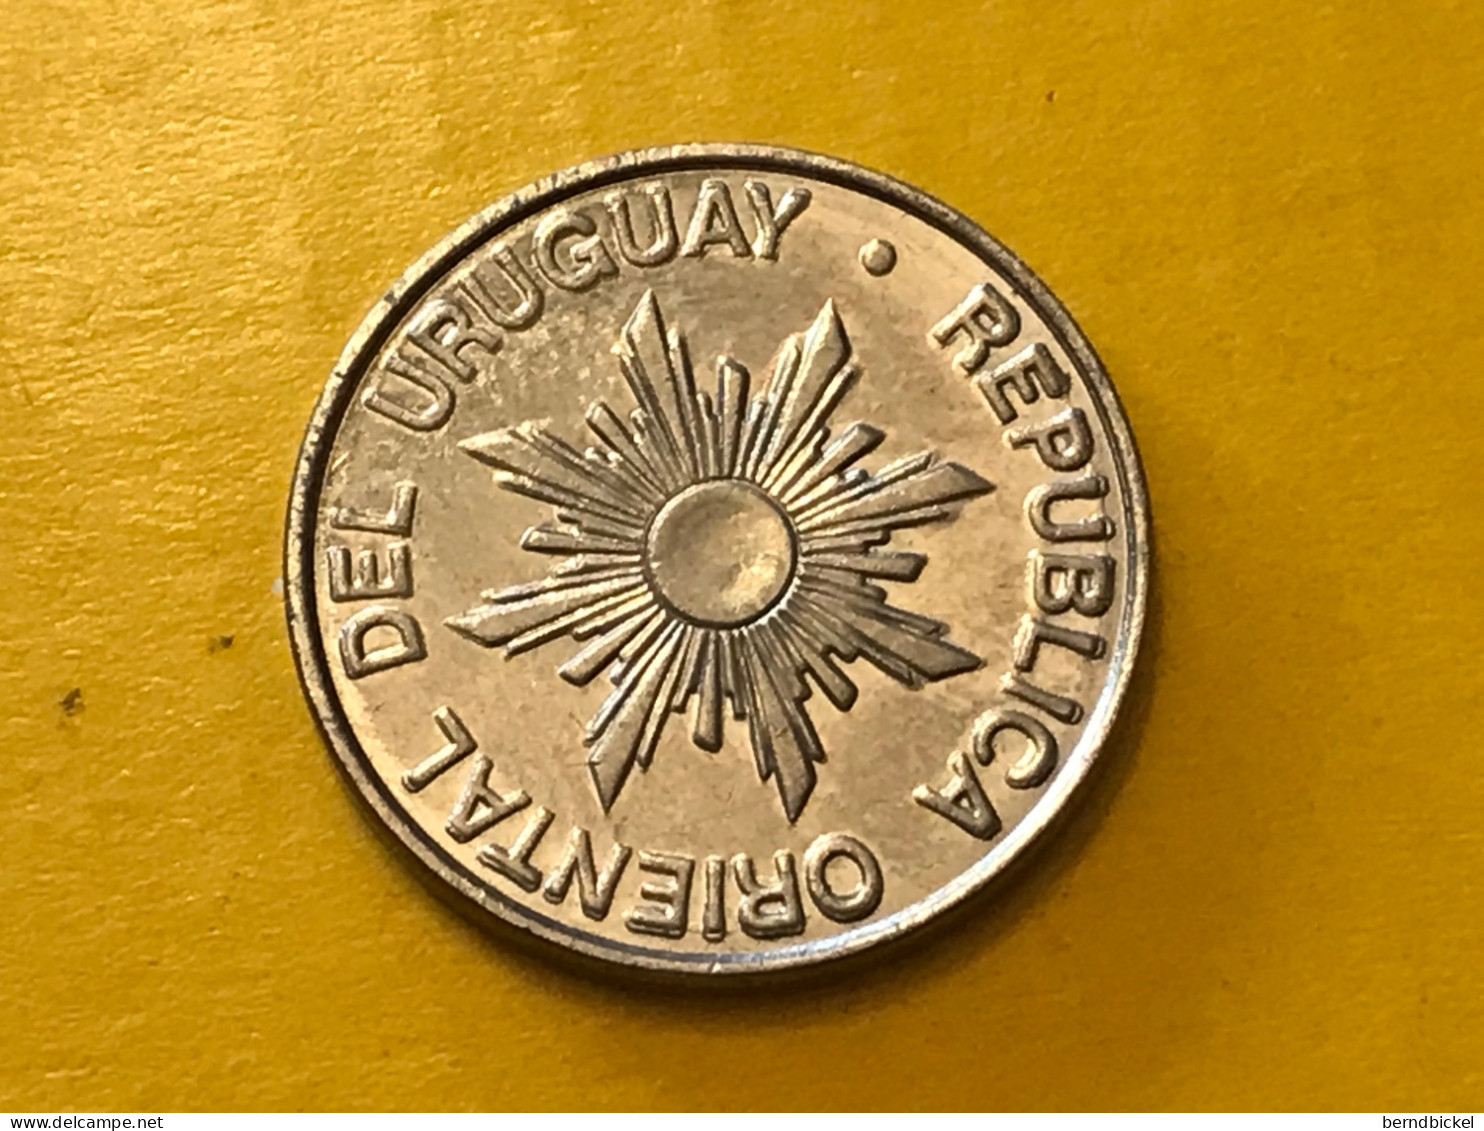 Münze Münzen Umlaufmünze Uruguay 10 Pesos 1989 - Uruguay